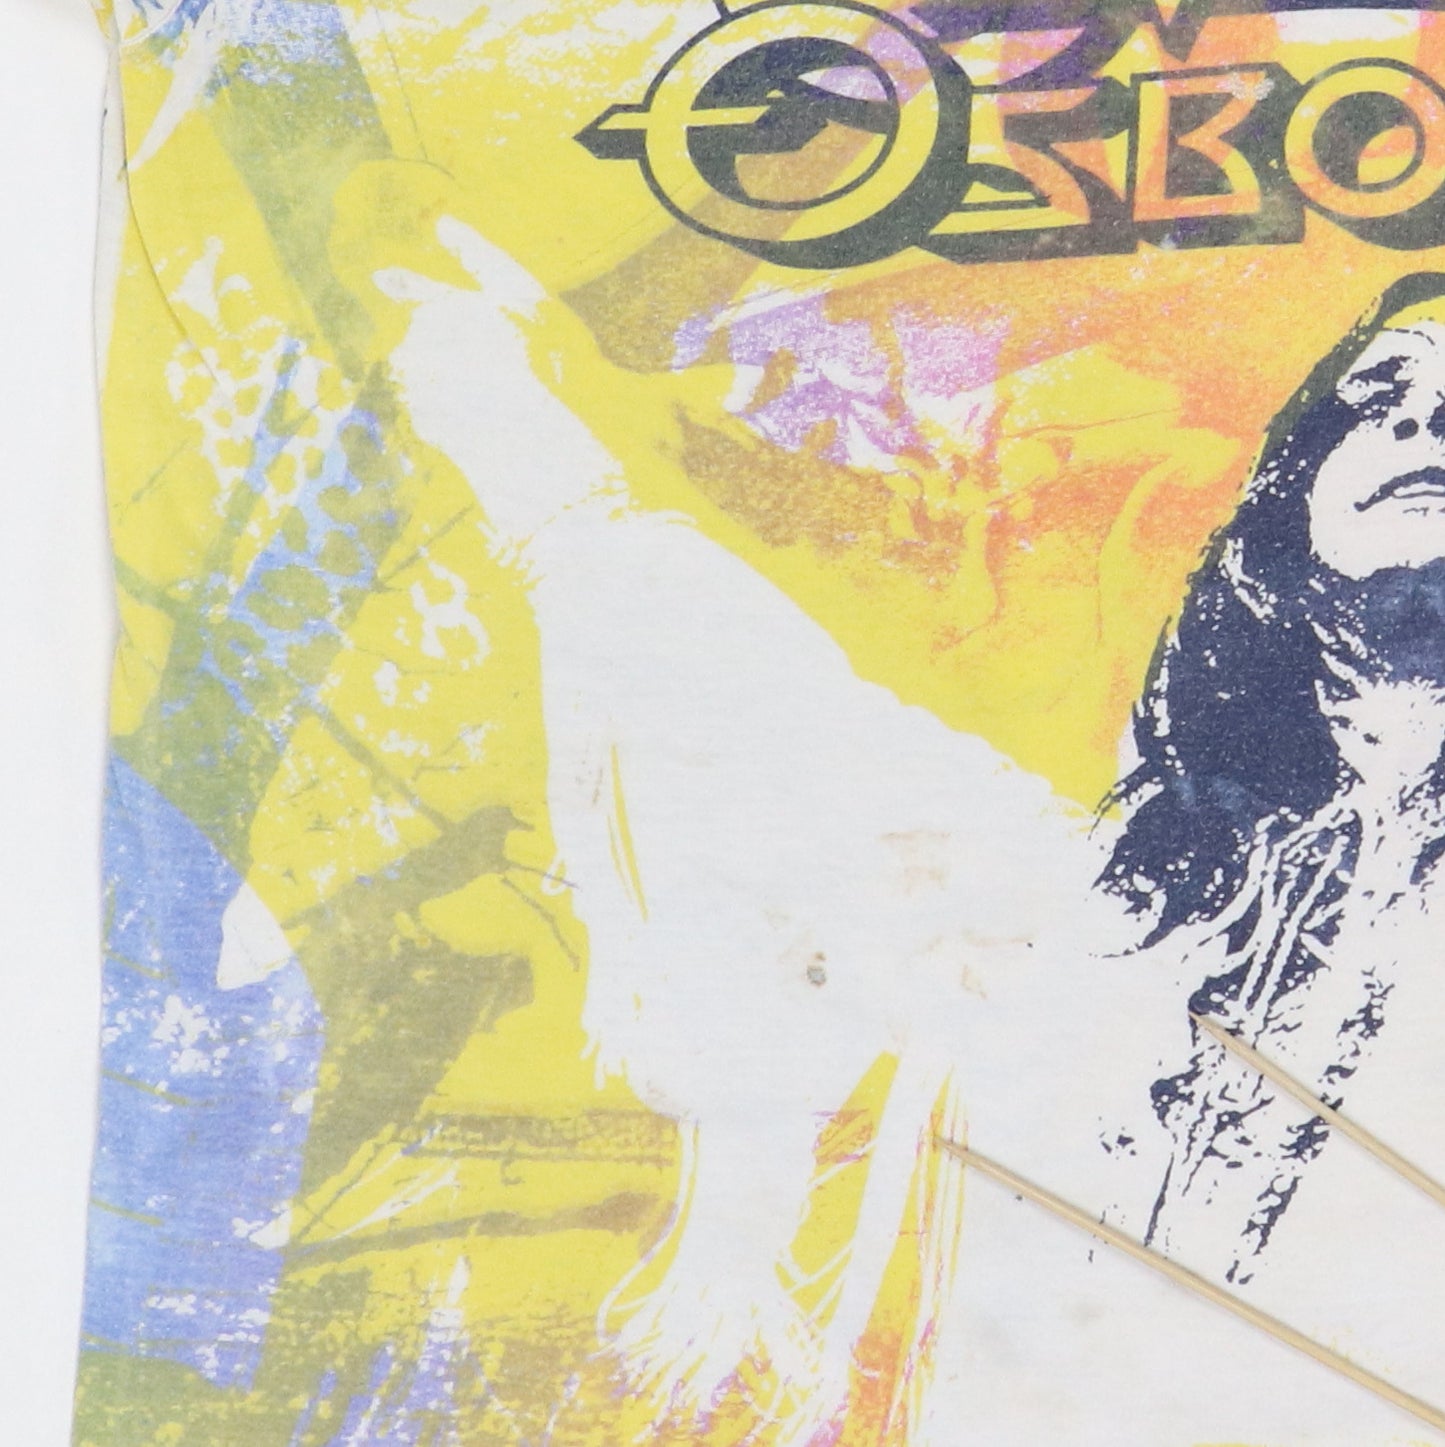 1991 Ozzy Osbourne All Over Print Shirt